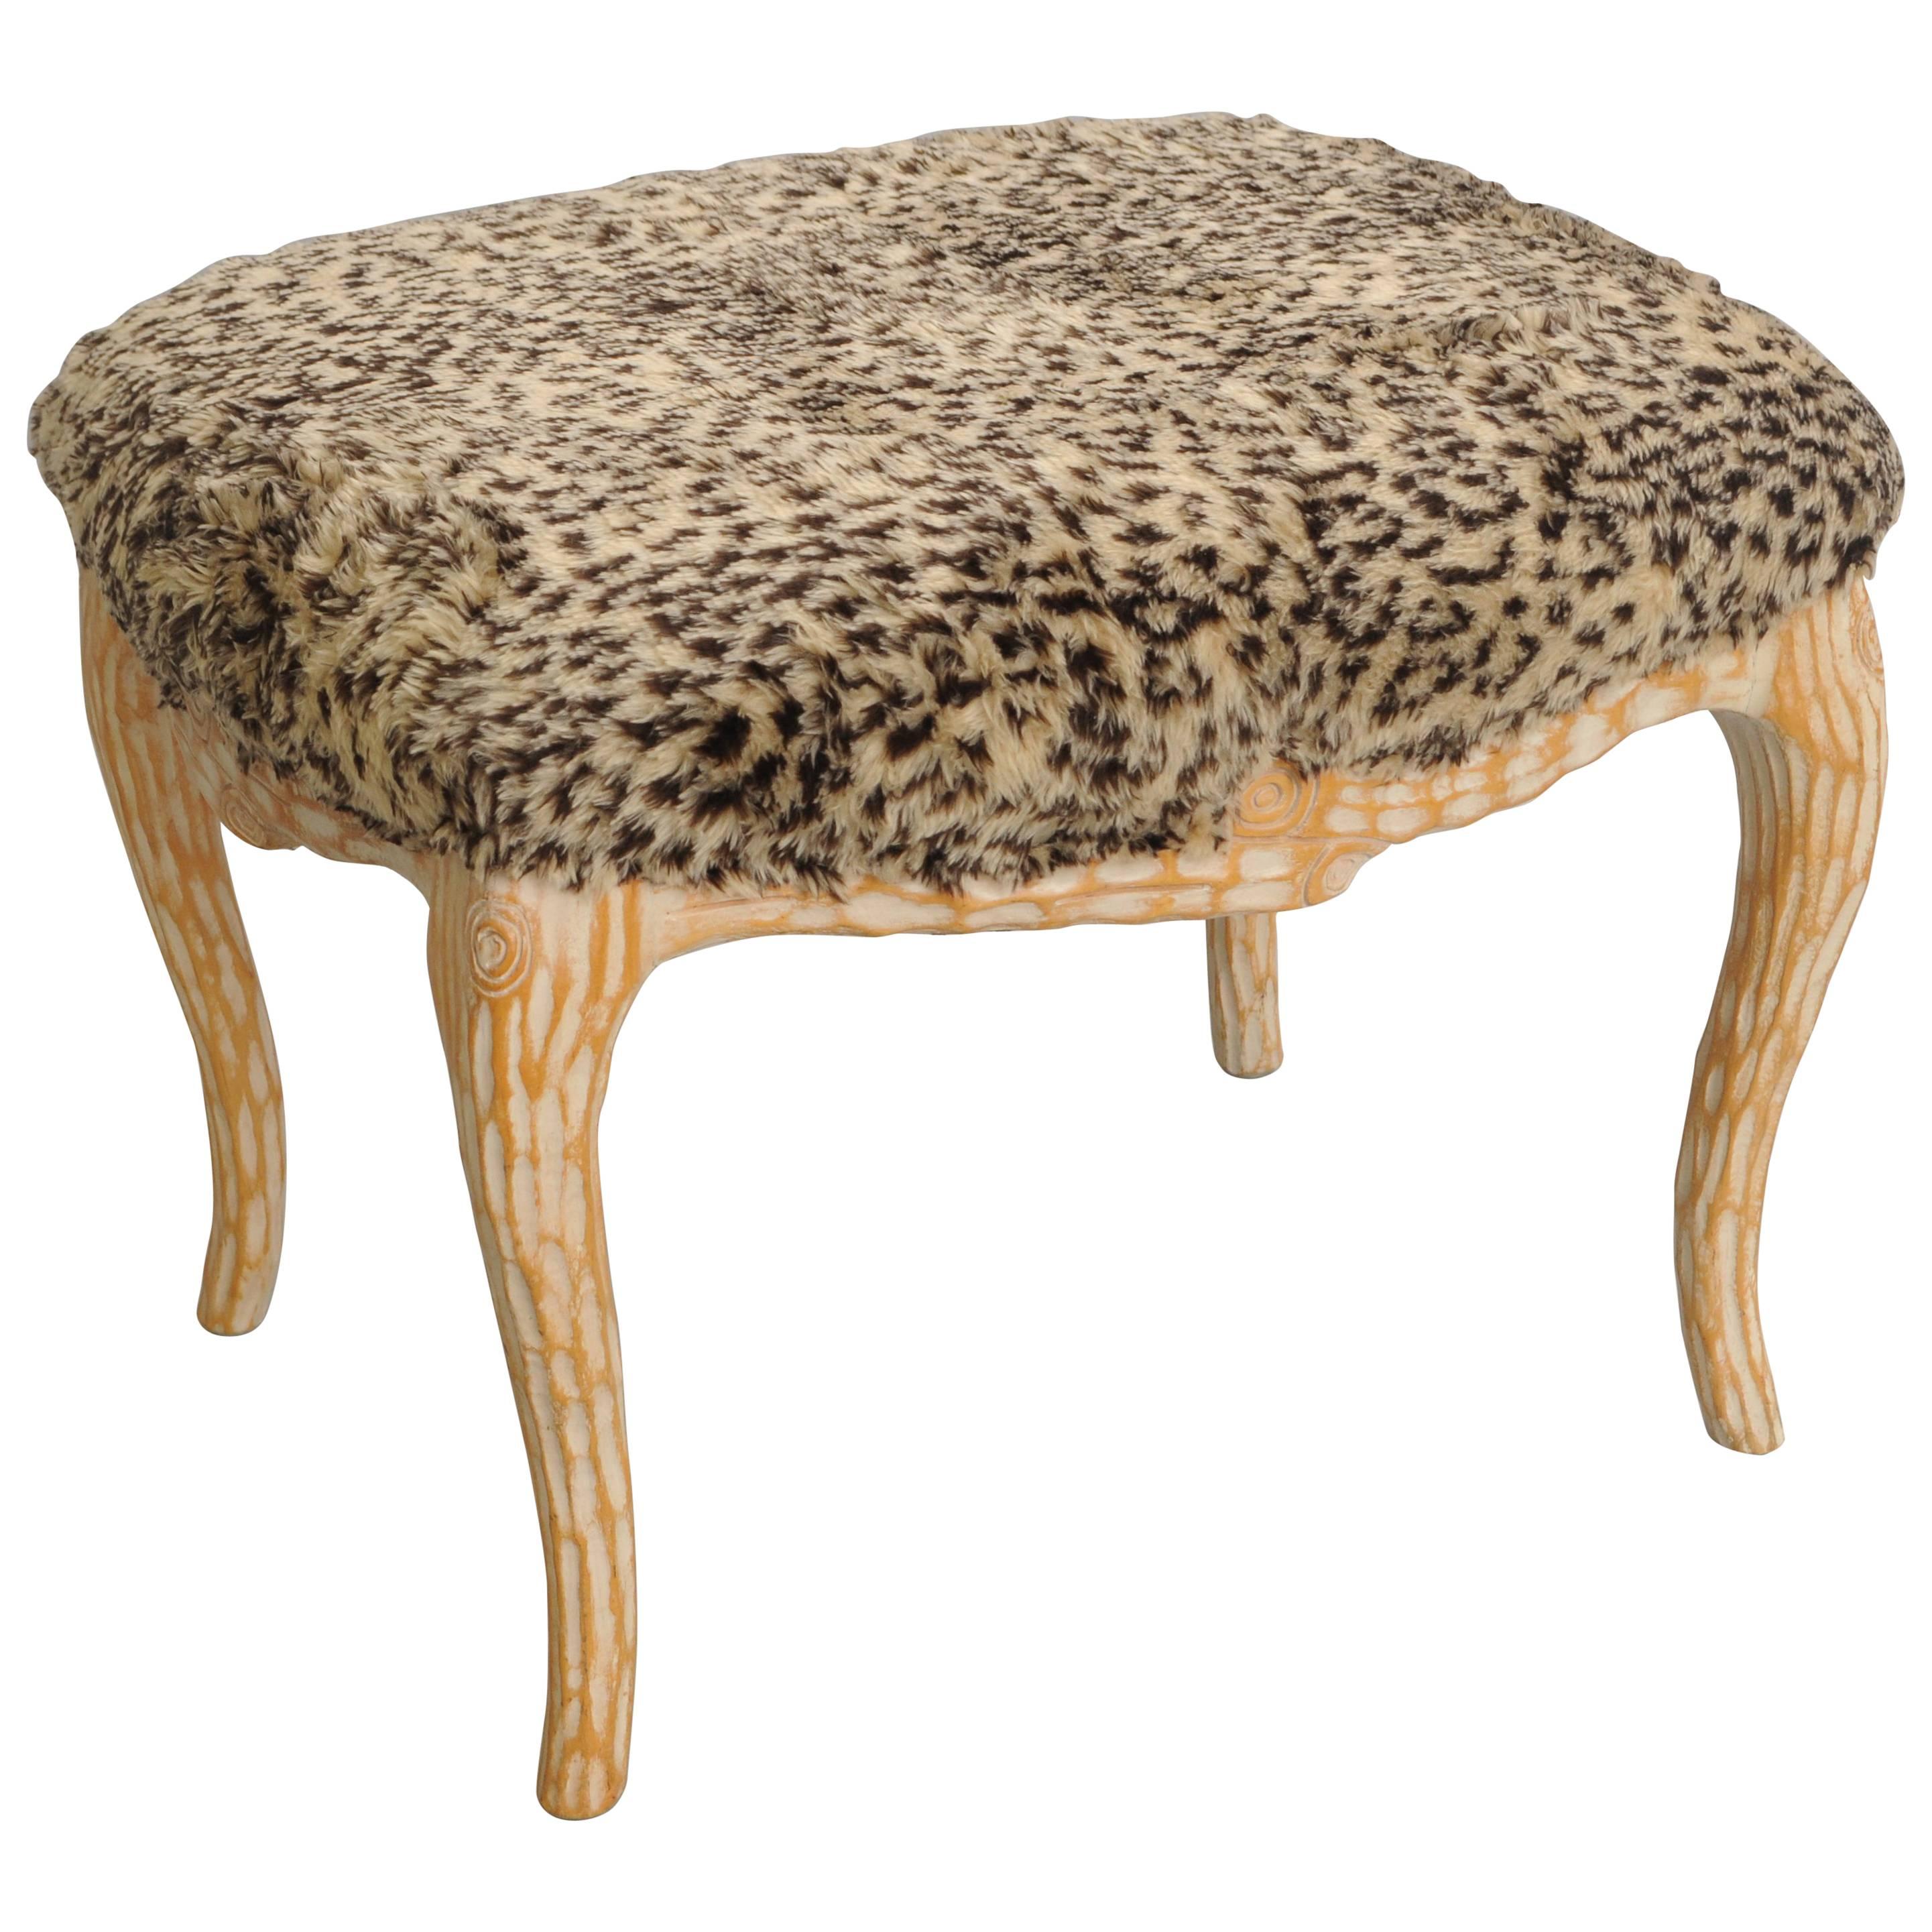 Vintage Hollywood Regency Faux Bois Wood Stool Bench Ottoman Fuzzy Leopard Seat